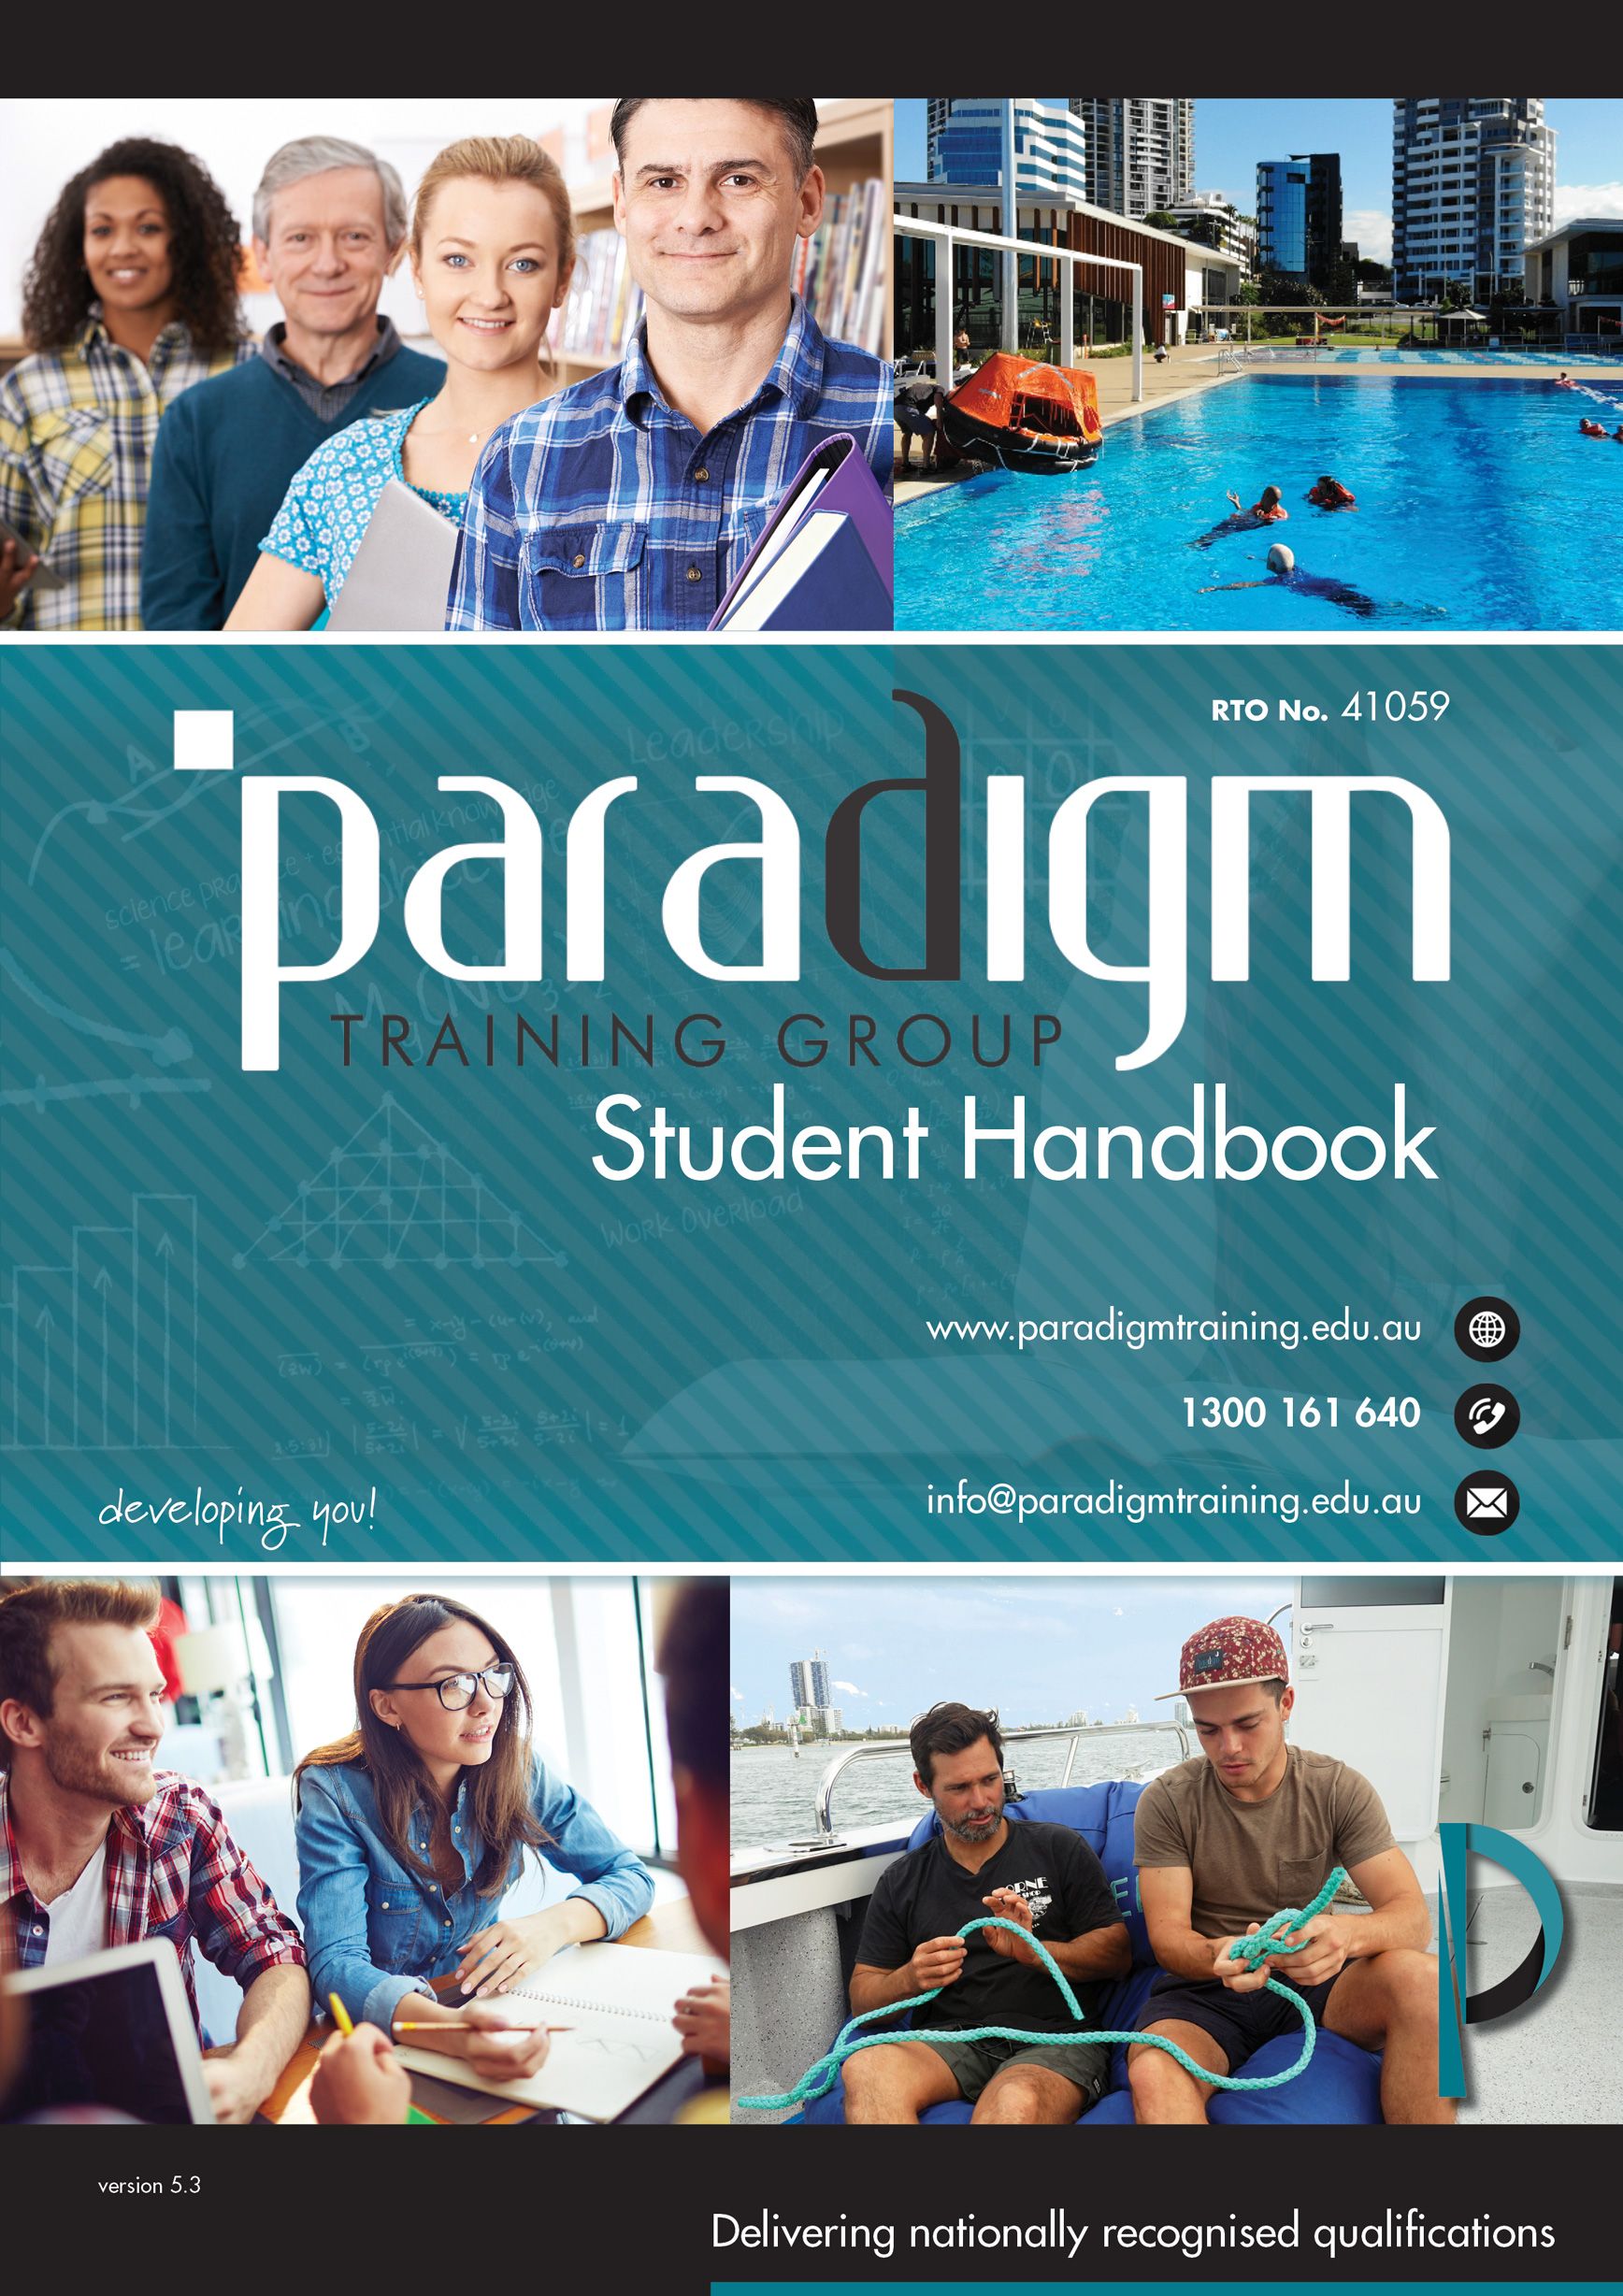 Paradigm Training Group - Student Handbook Cover